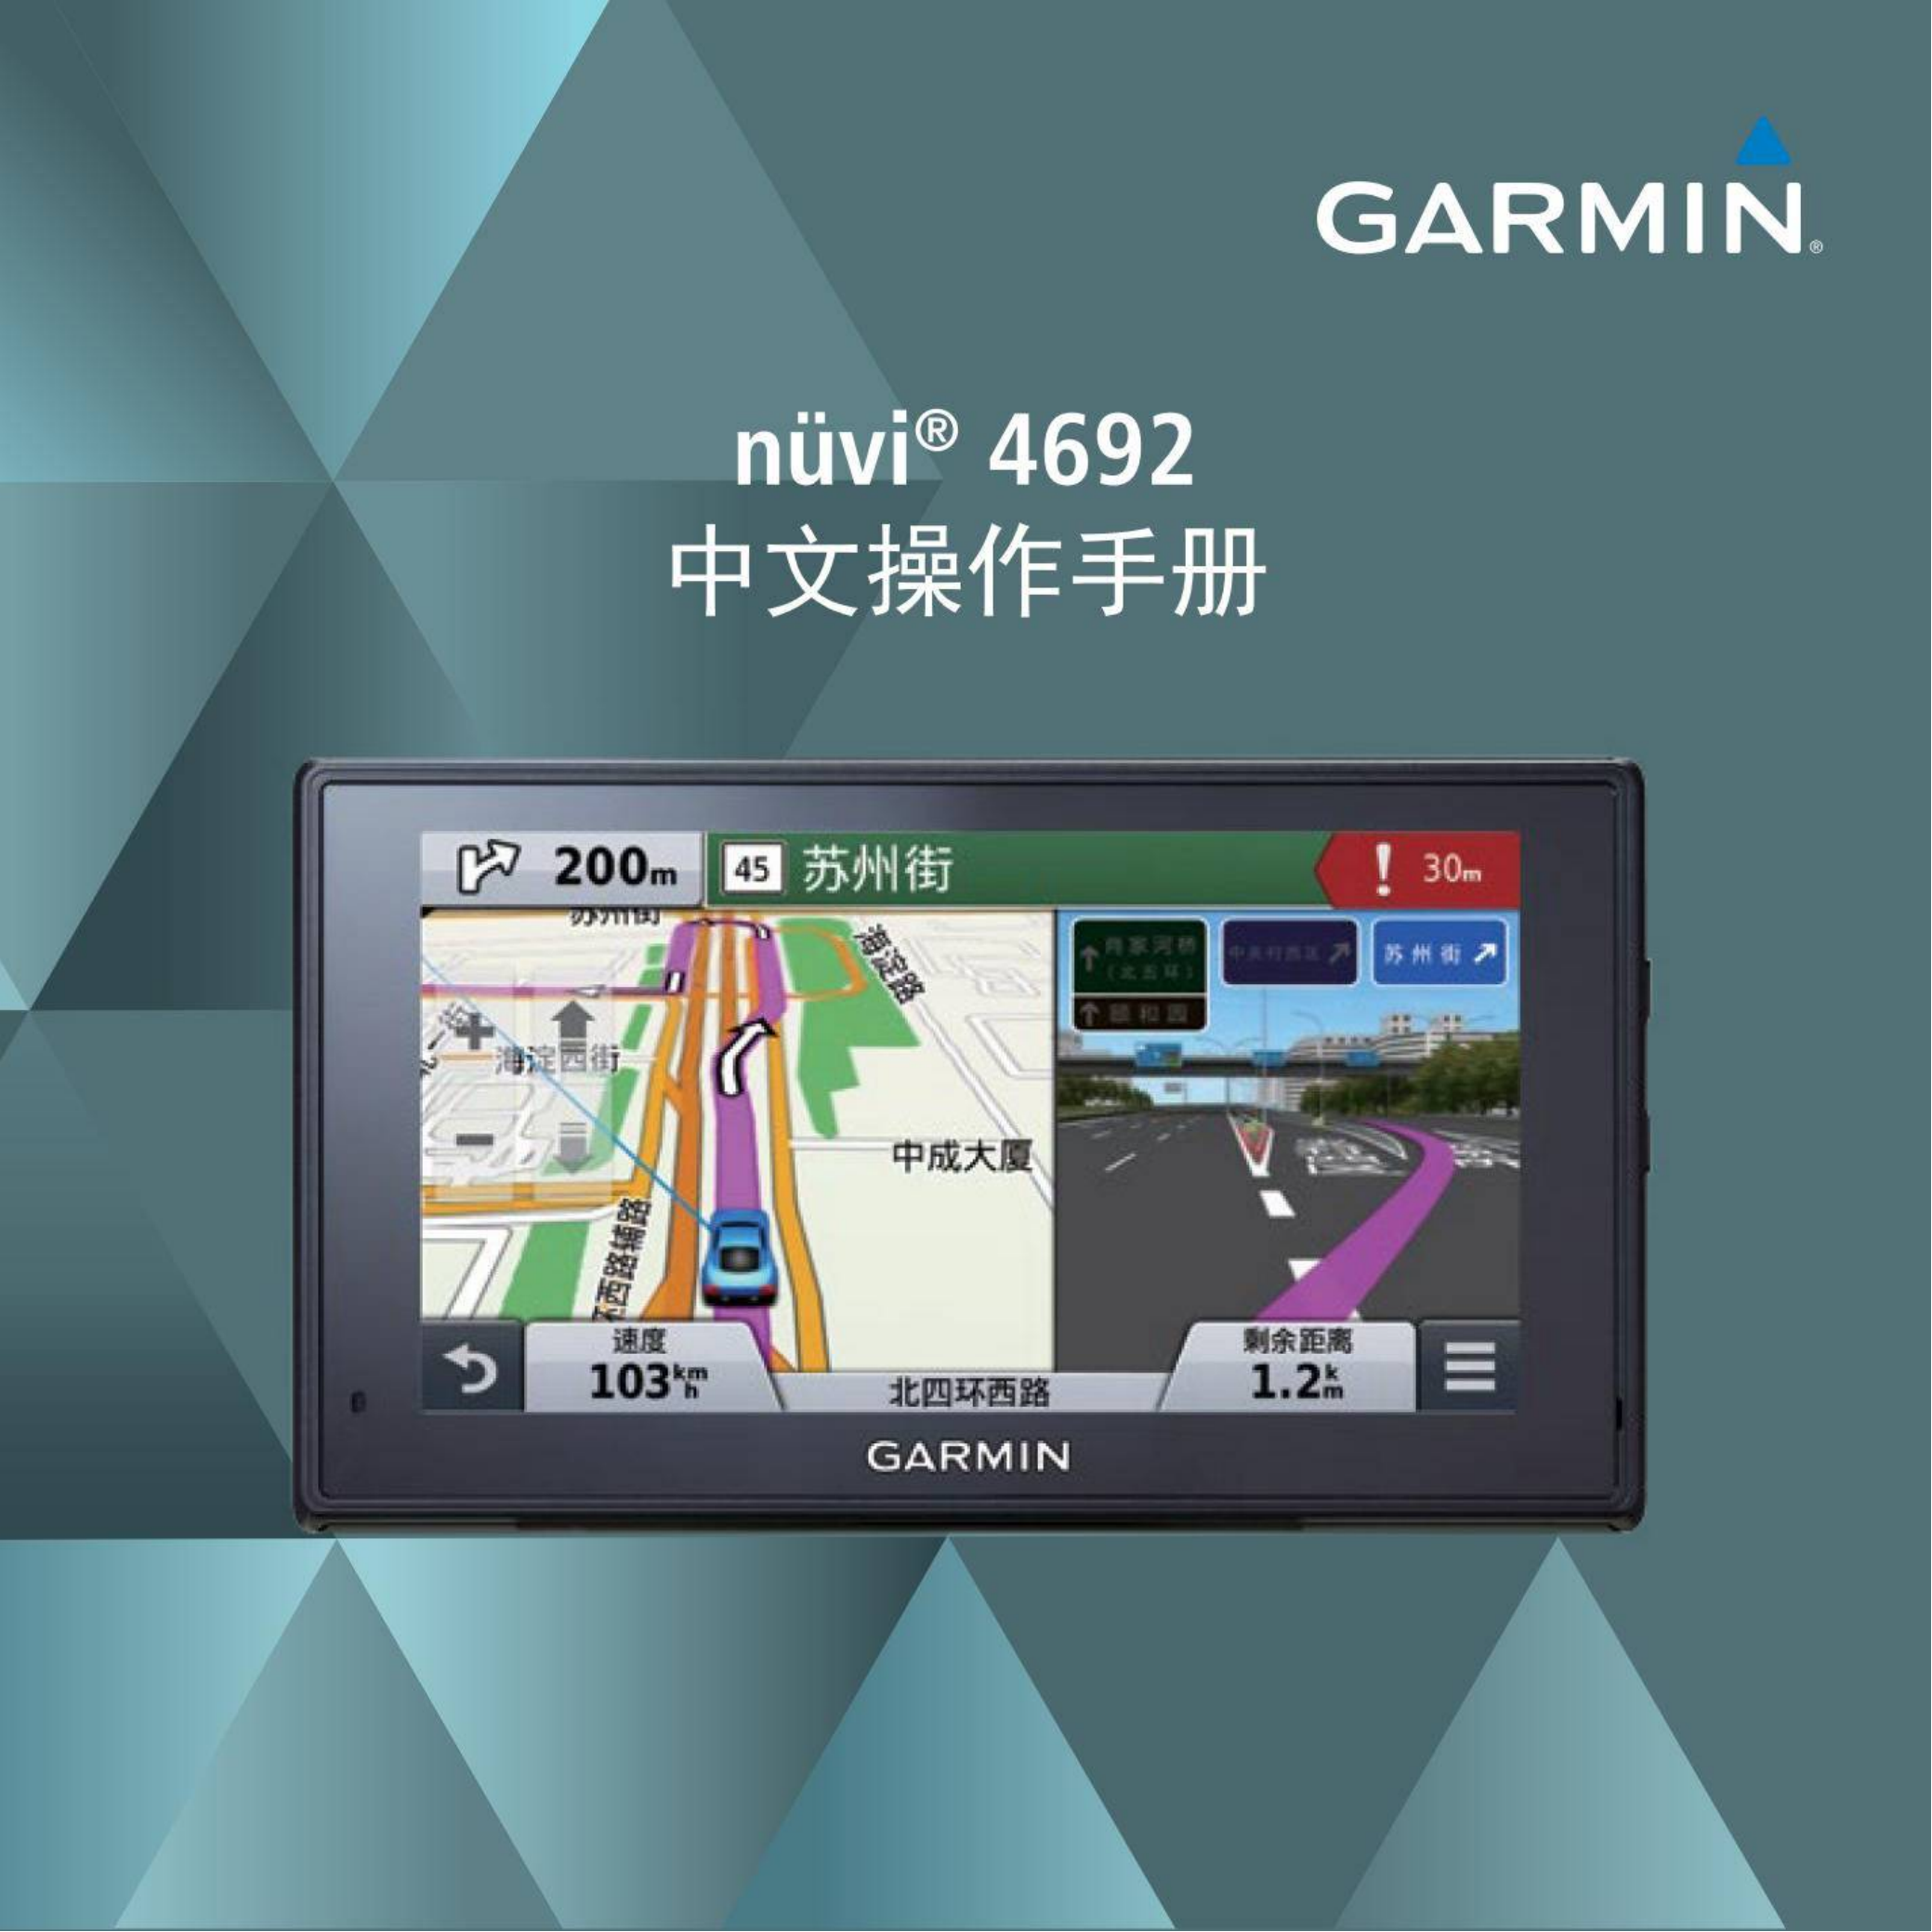 GARMIN GPS导航设备-nuvi 4692说明书.pdf